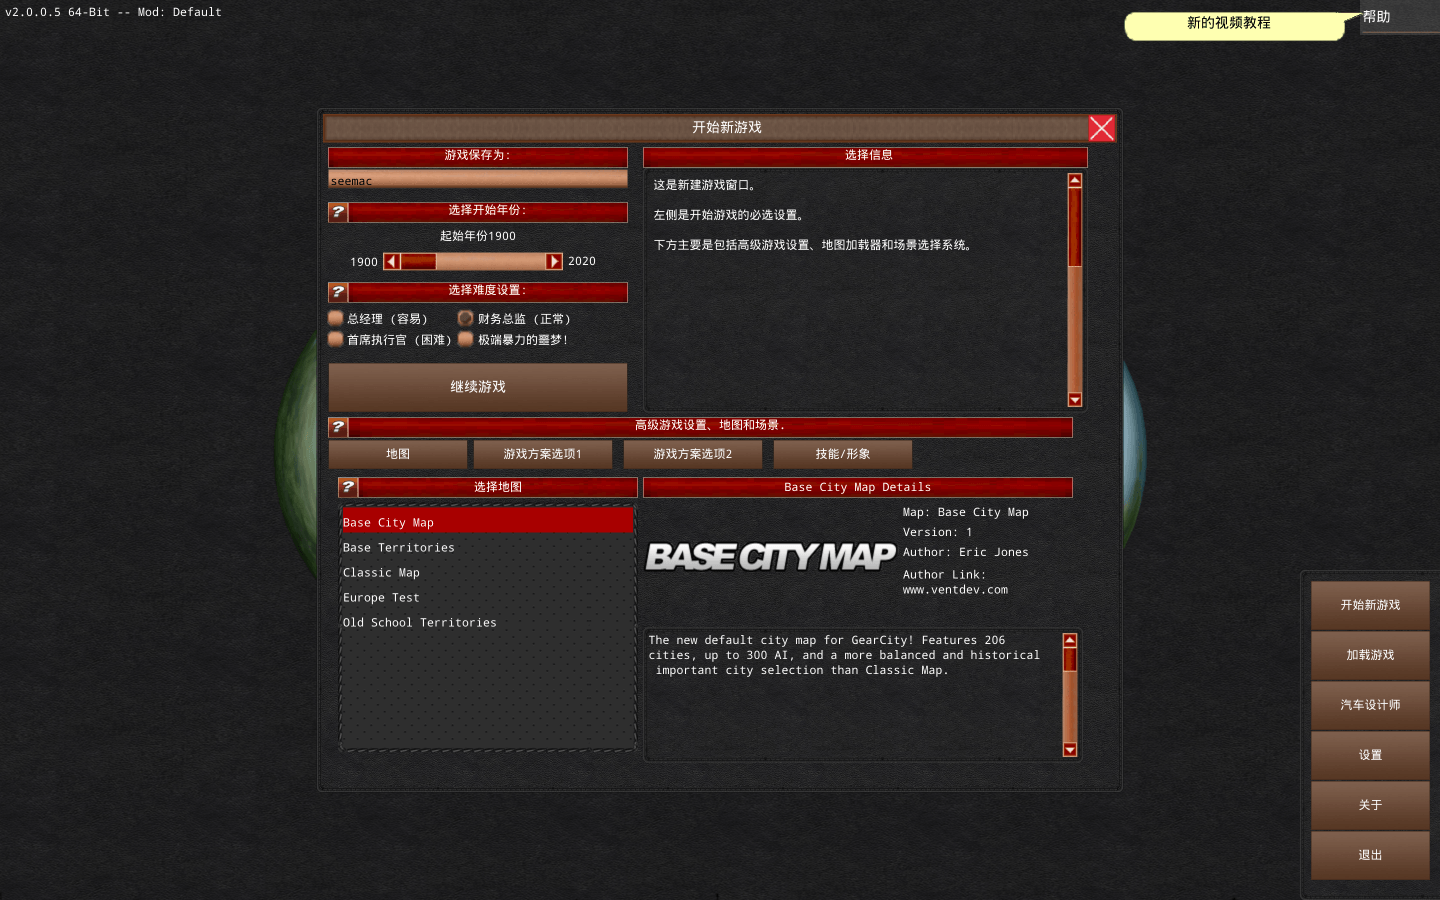 齿轮城市 GearCity for Mac v2.0.0.11 中文原生版-2